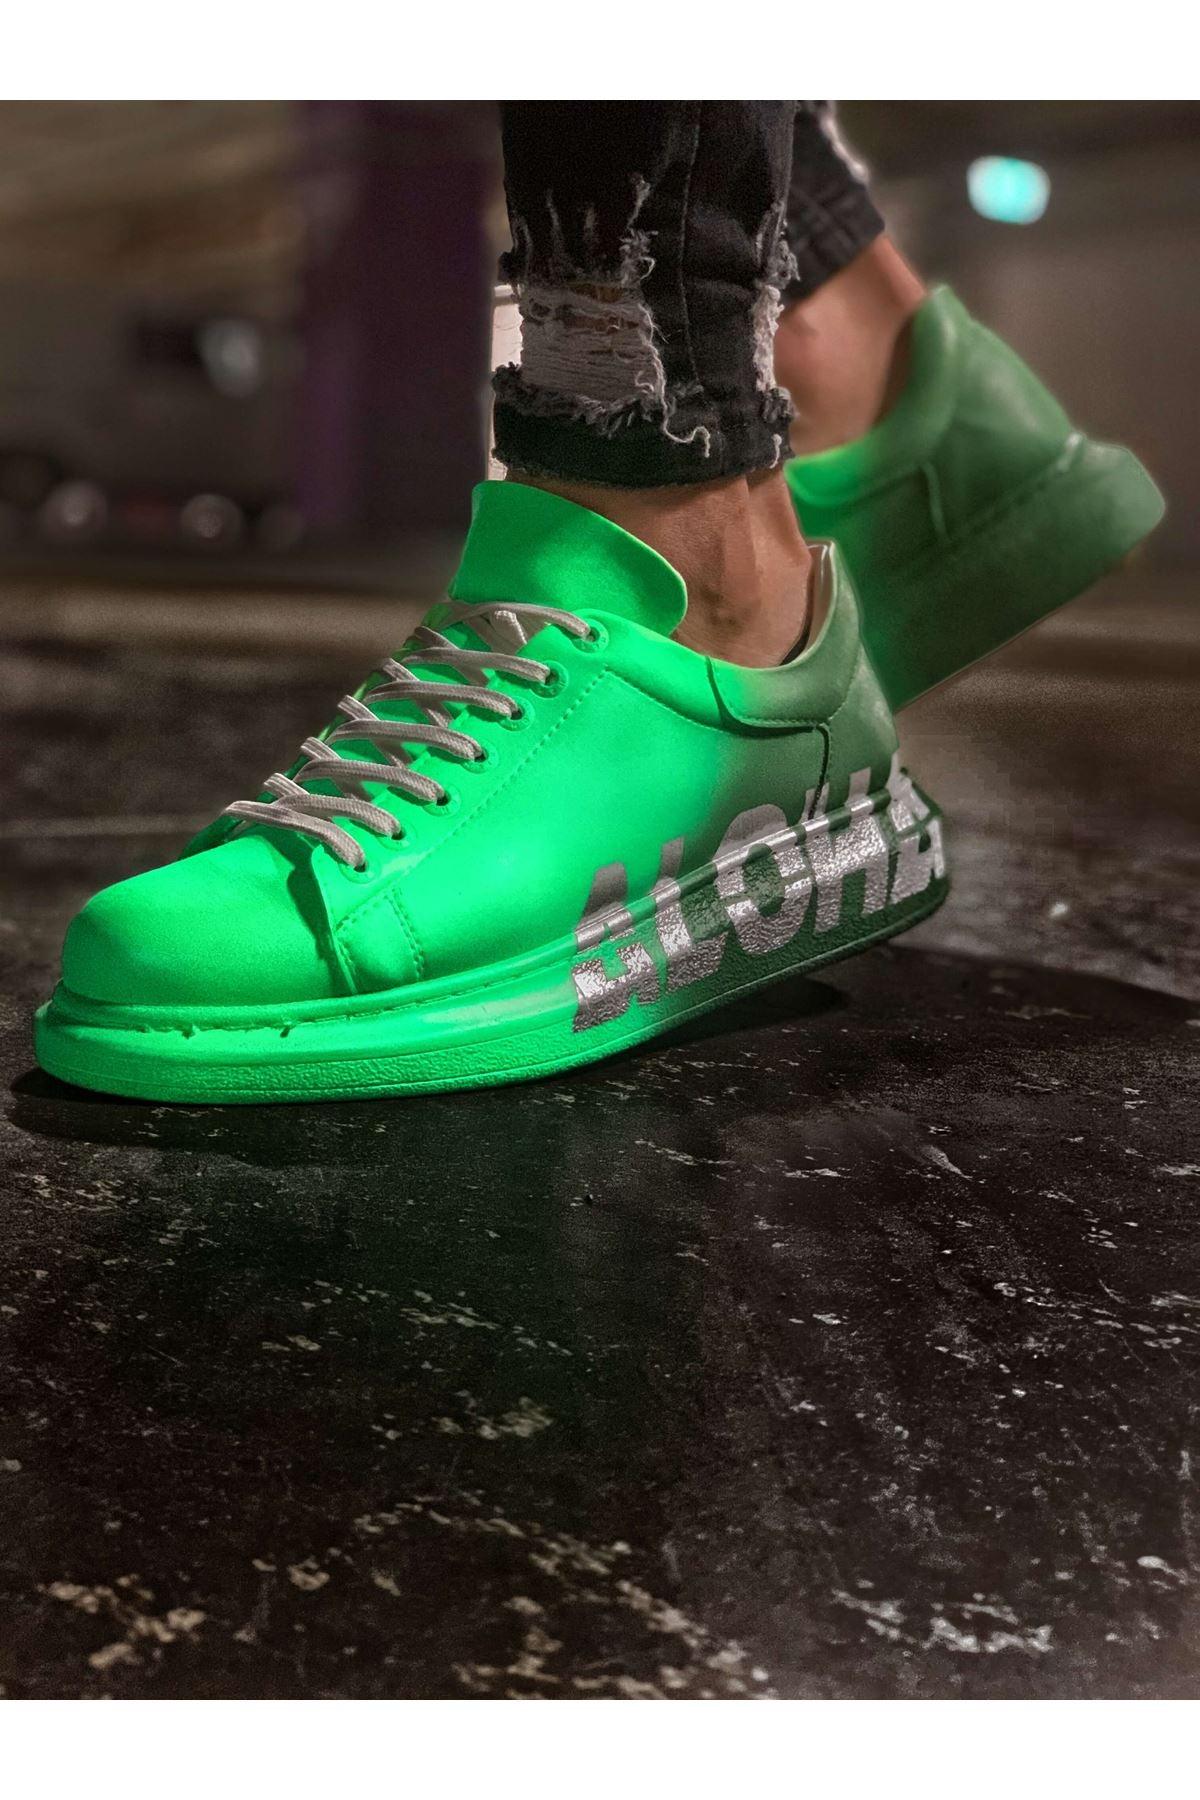 CH254 Men's Unisex Green Casual Sneaker Sports Shoes - STREET MODE ™